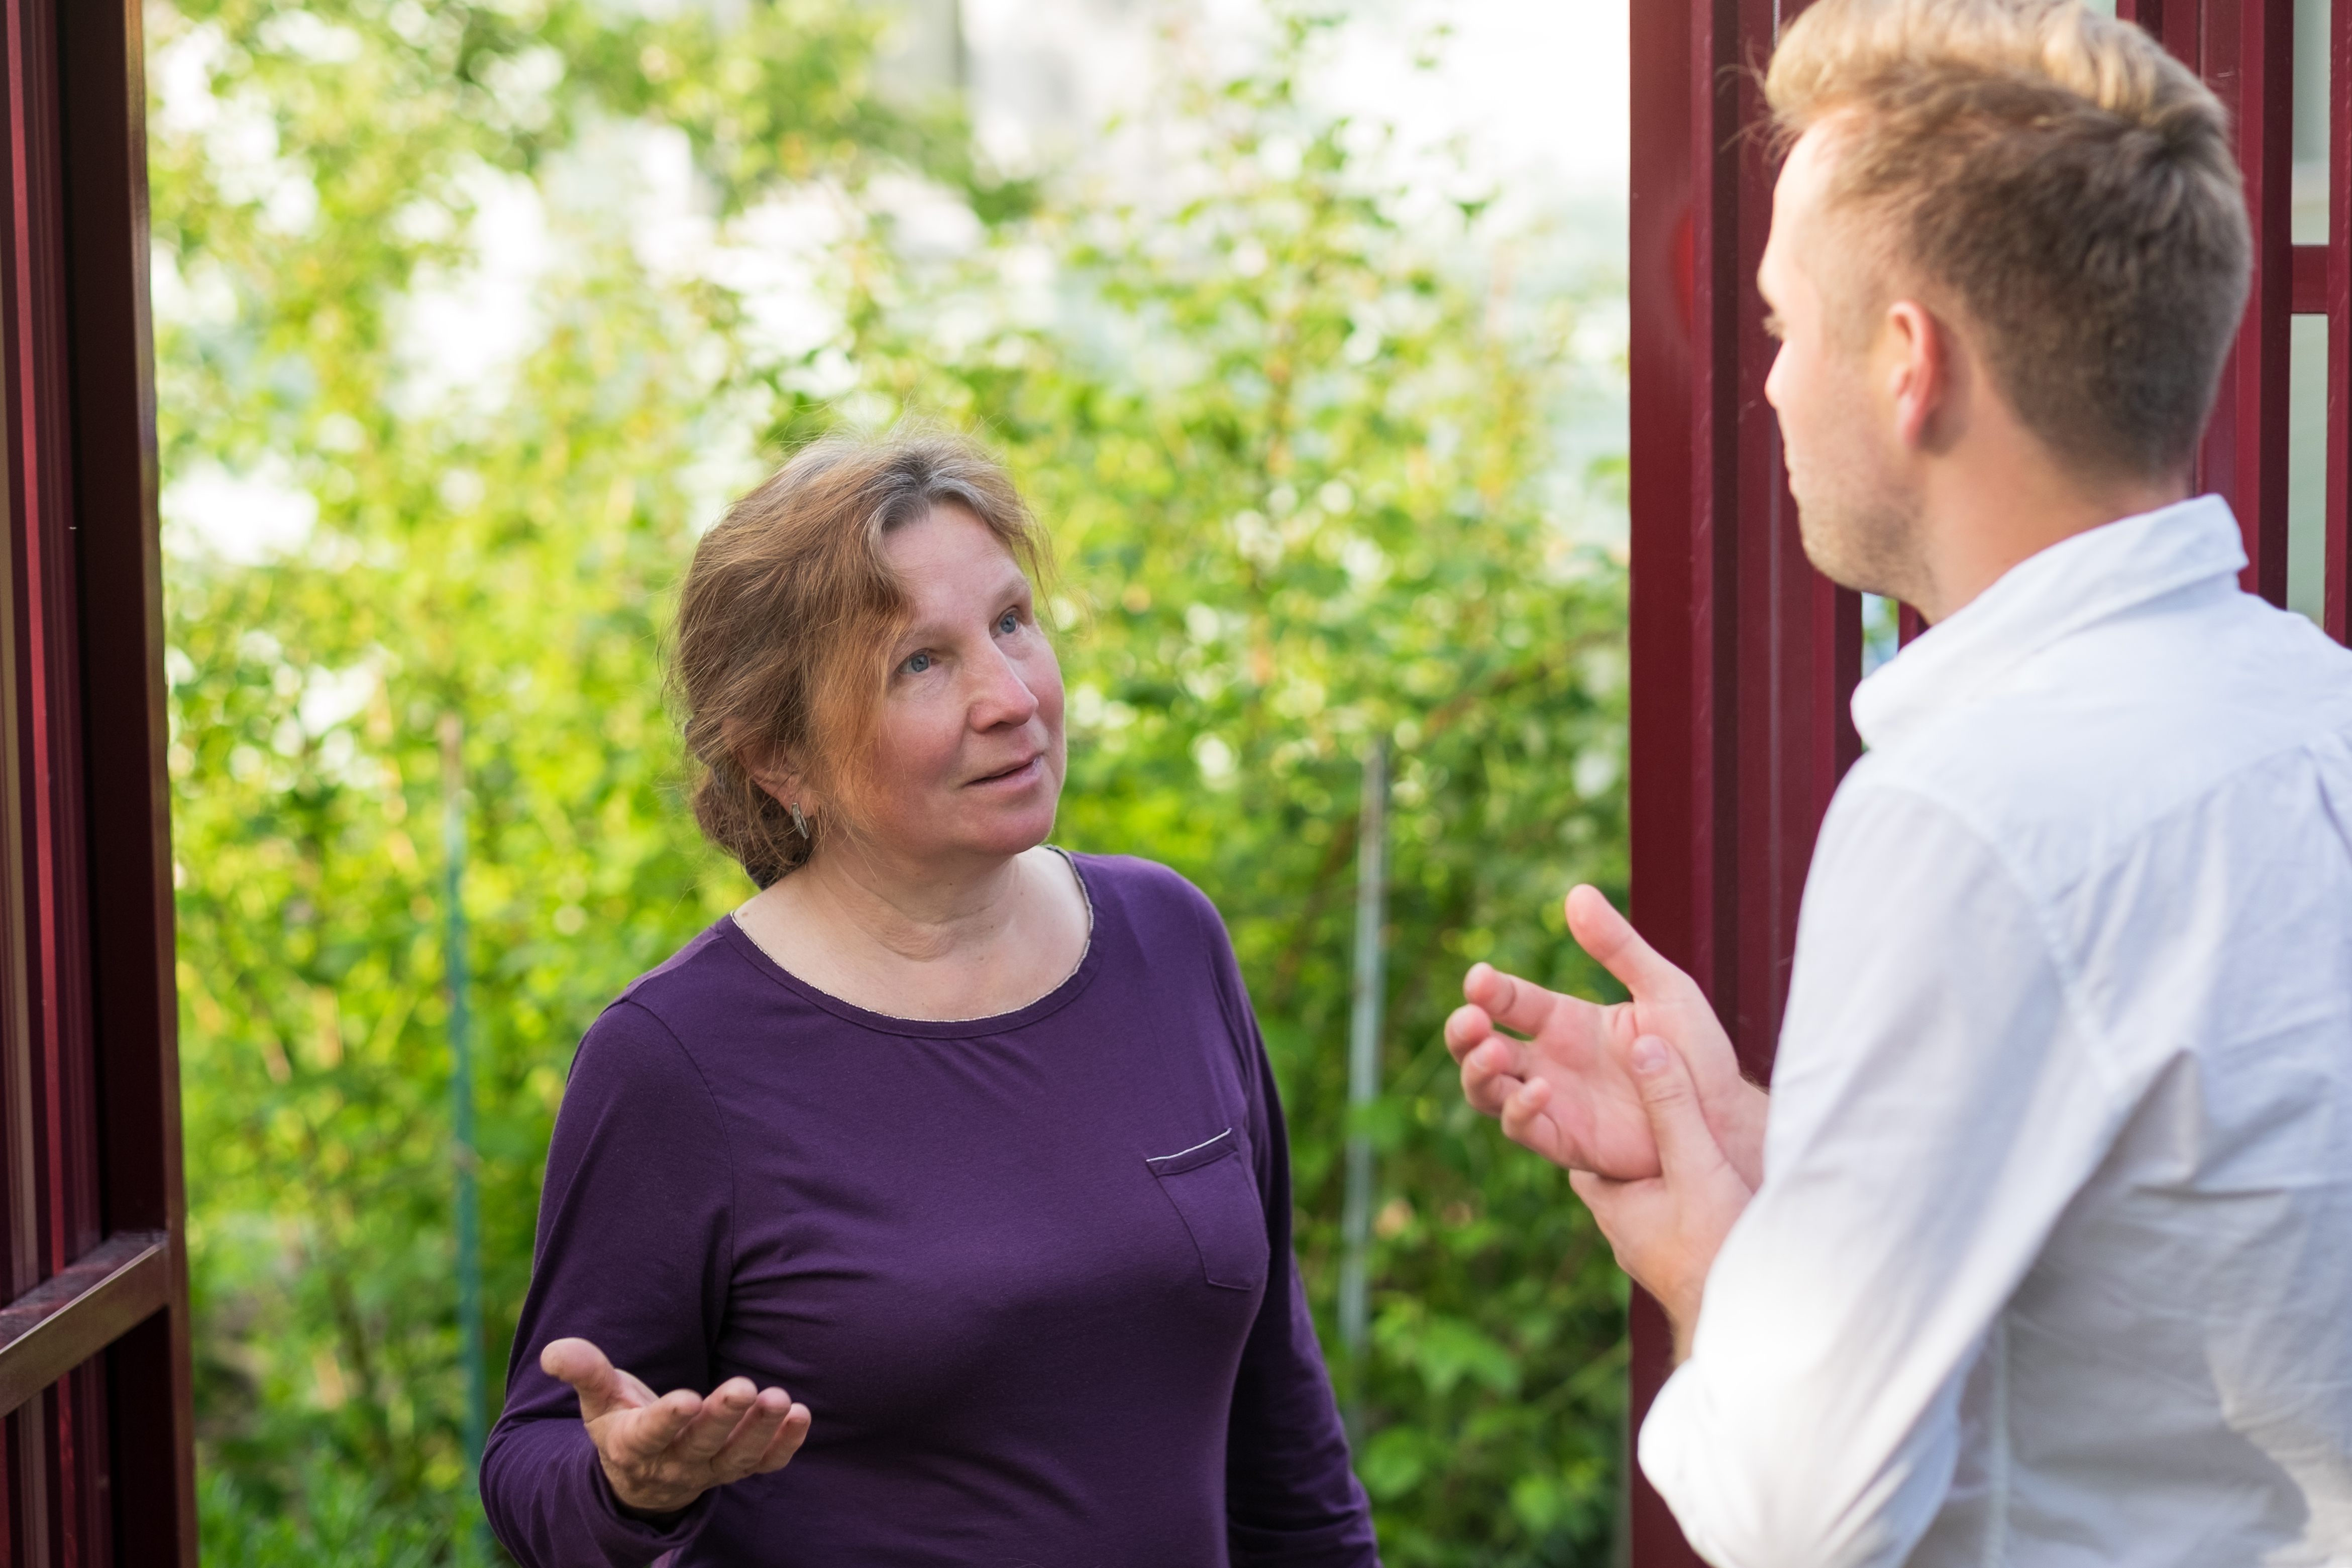 A woman talking to a man | Source: Shutterstock